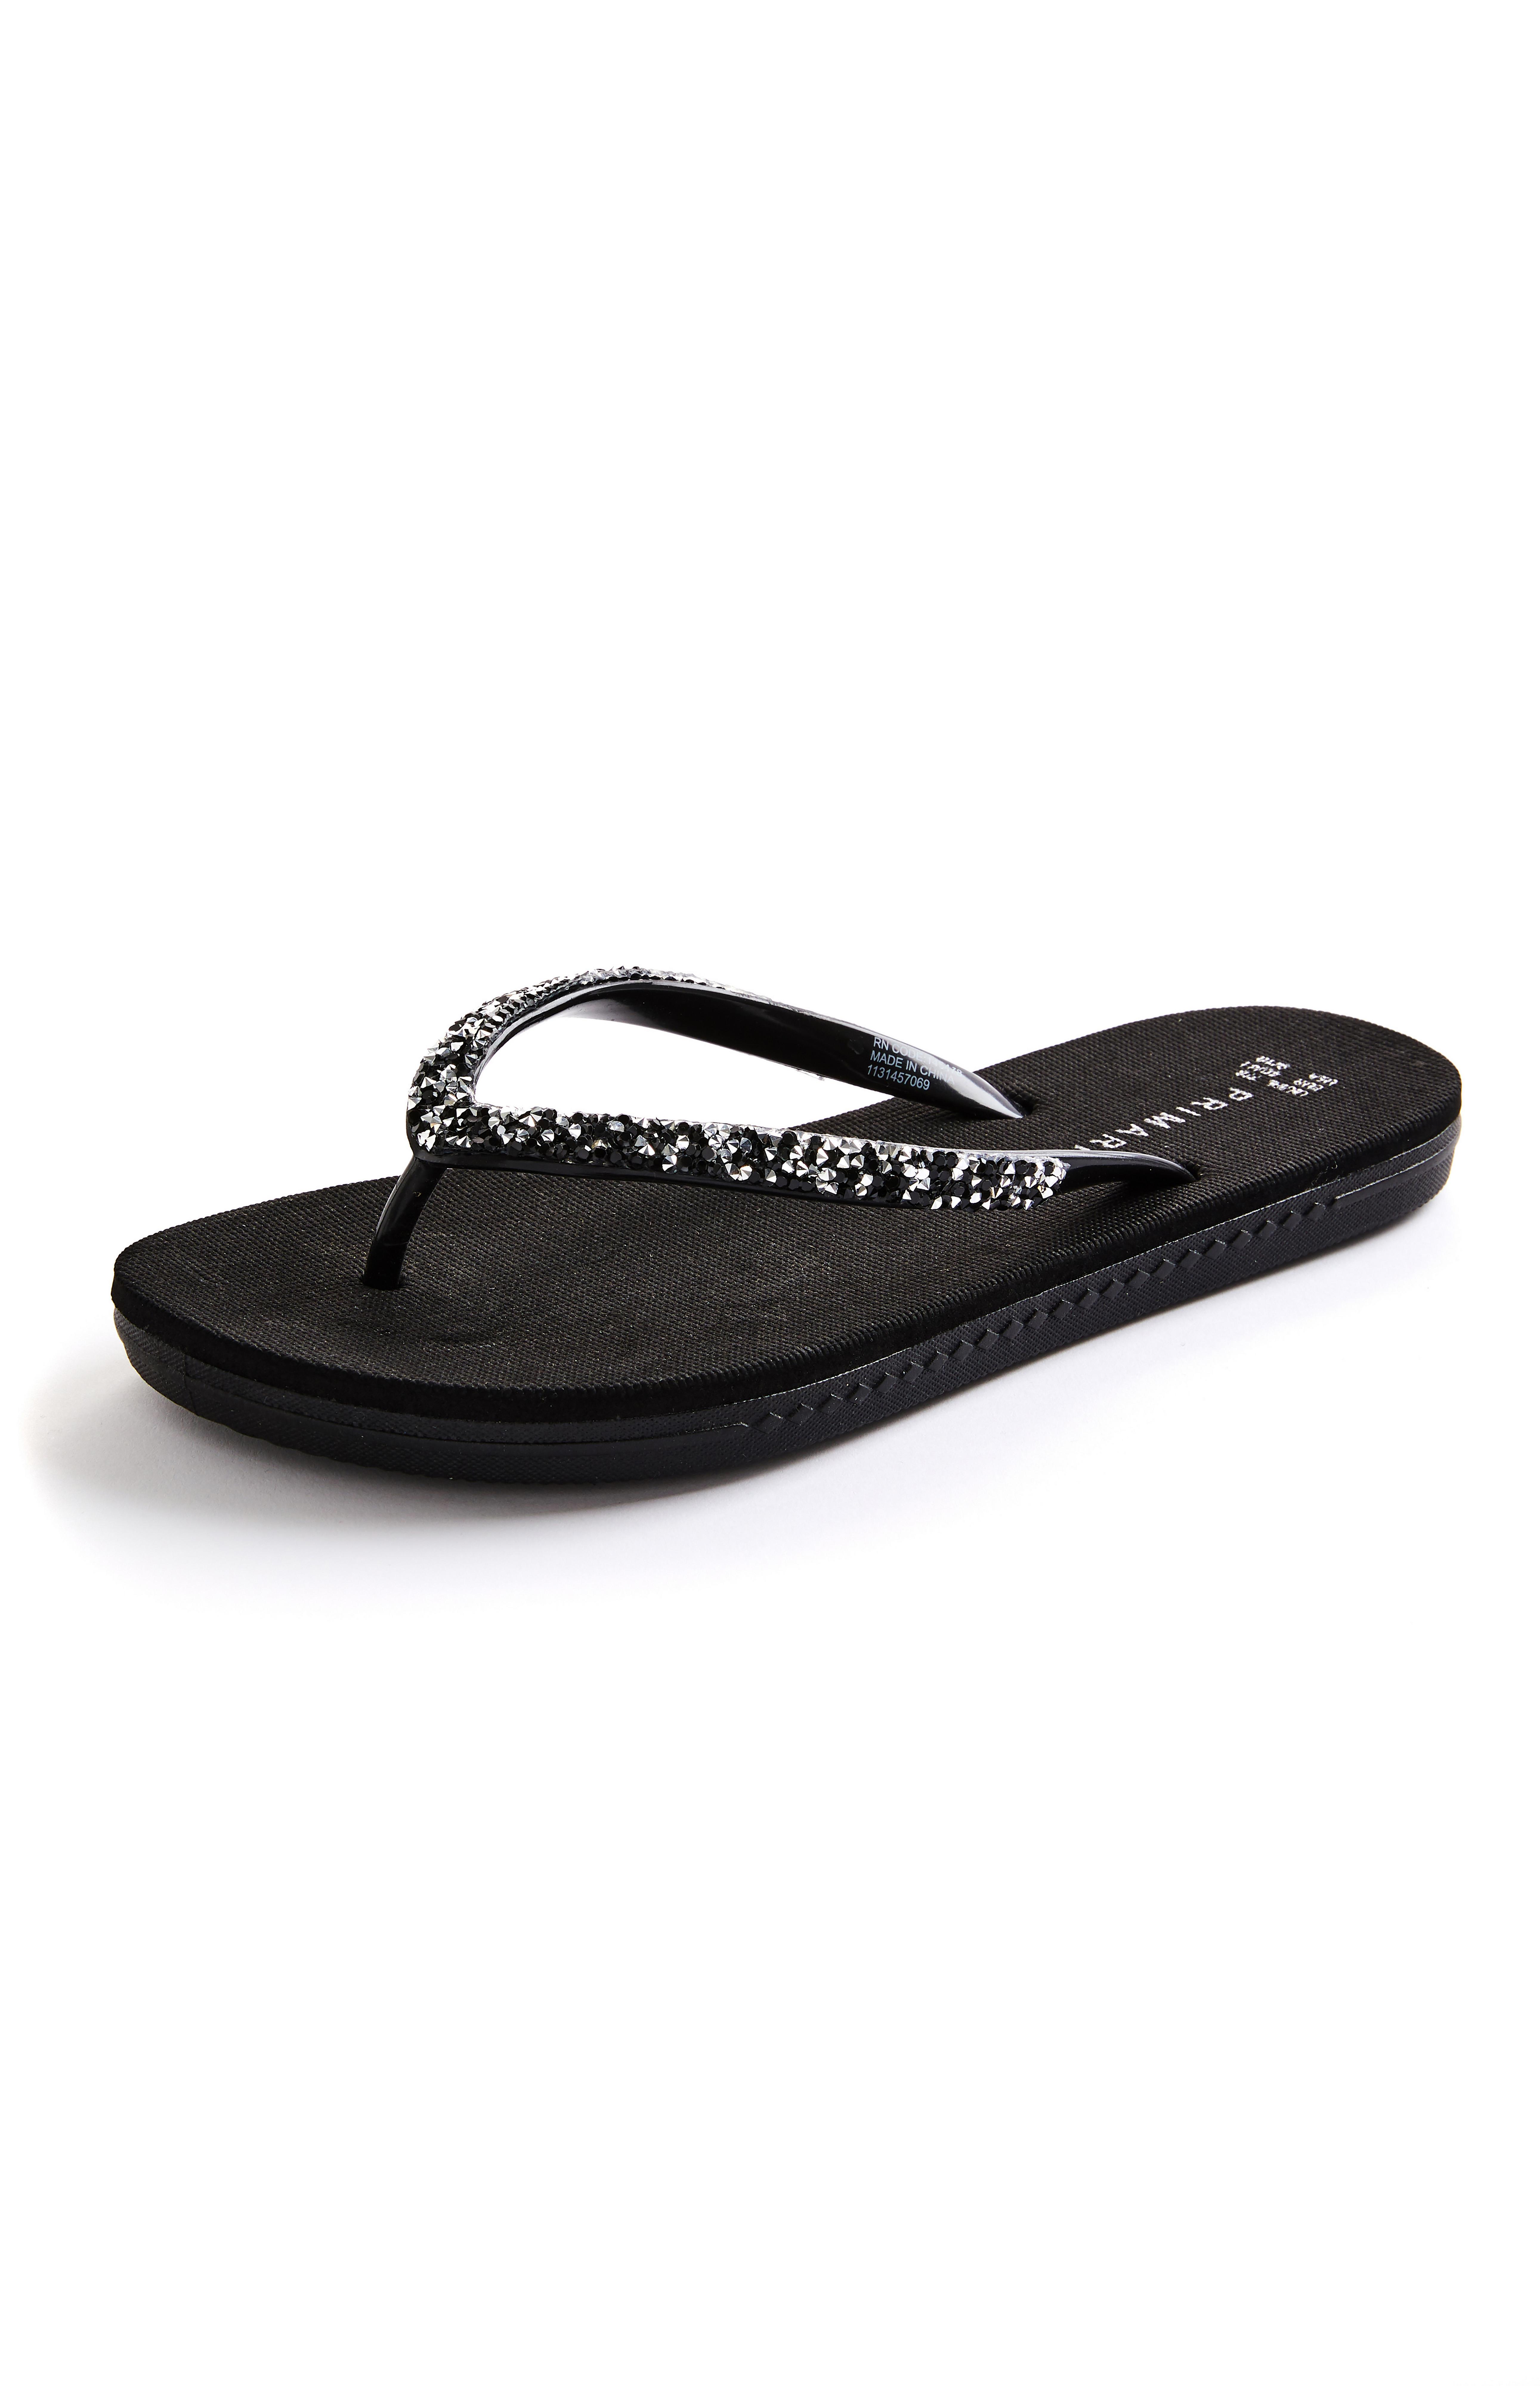 Black Diamante Thong Flip Flops | Women's Beach Shoes: Sandals ...